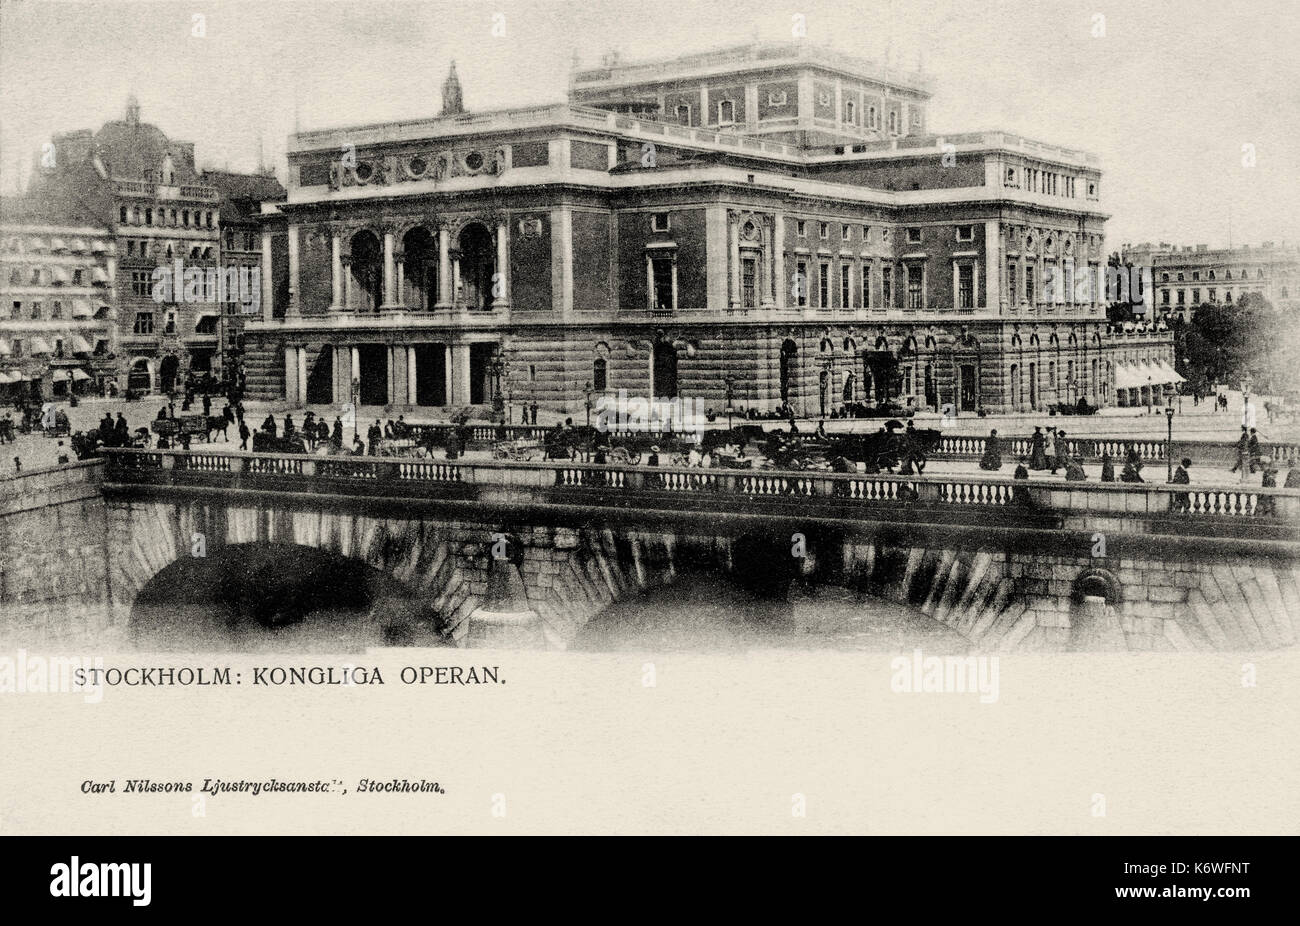 Royal Opera House, Stockholm. 19th century. Stock Photo